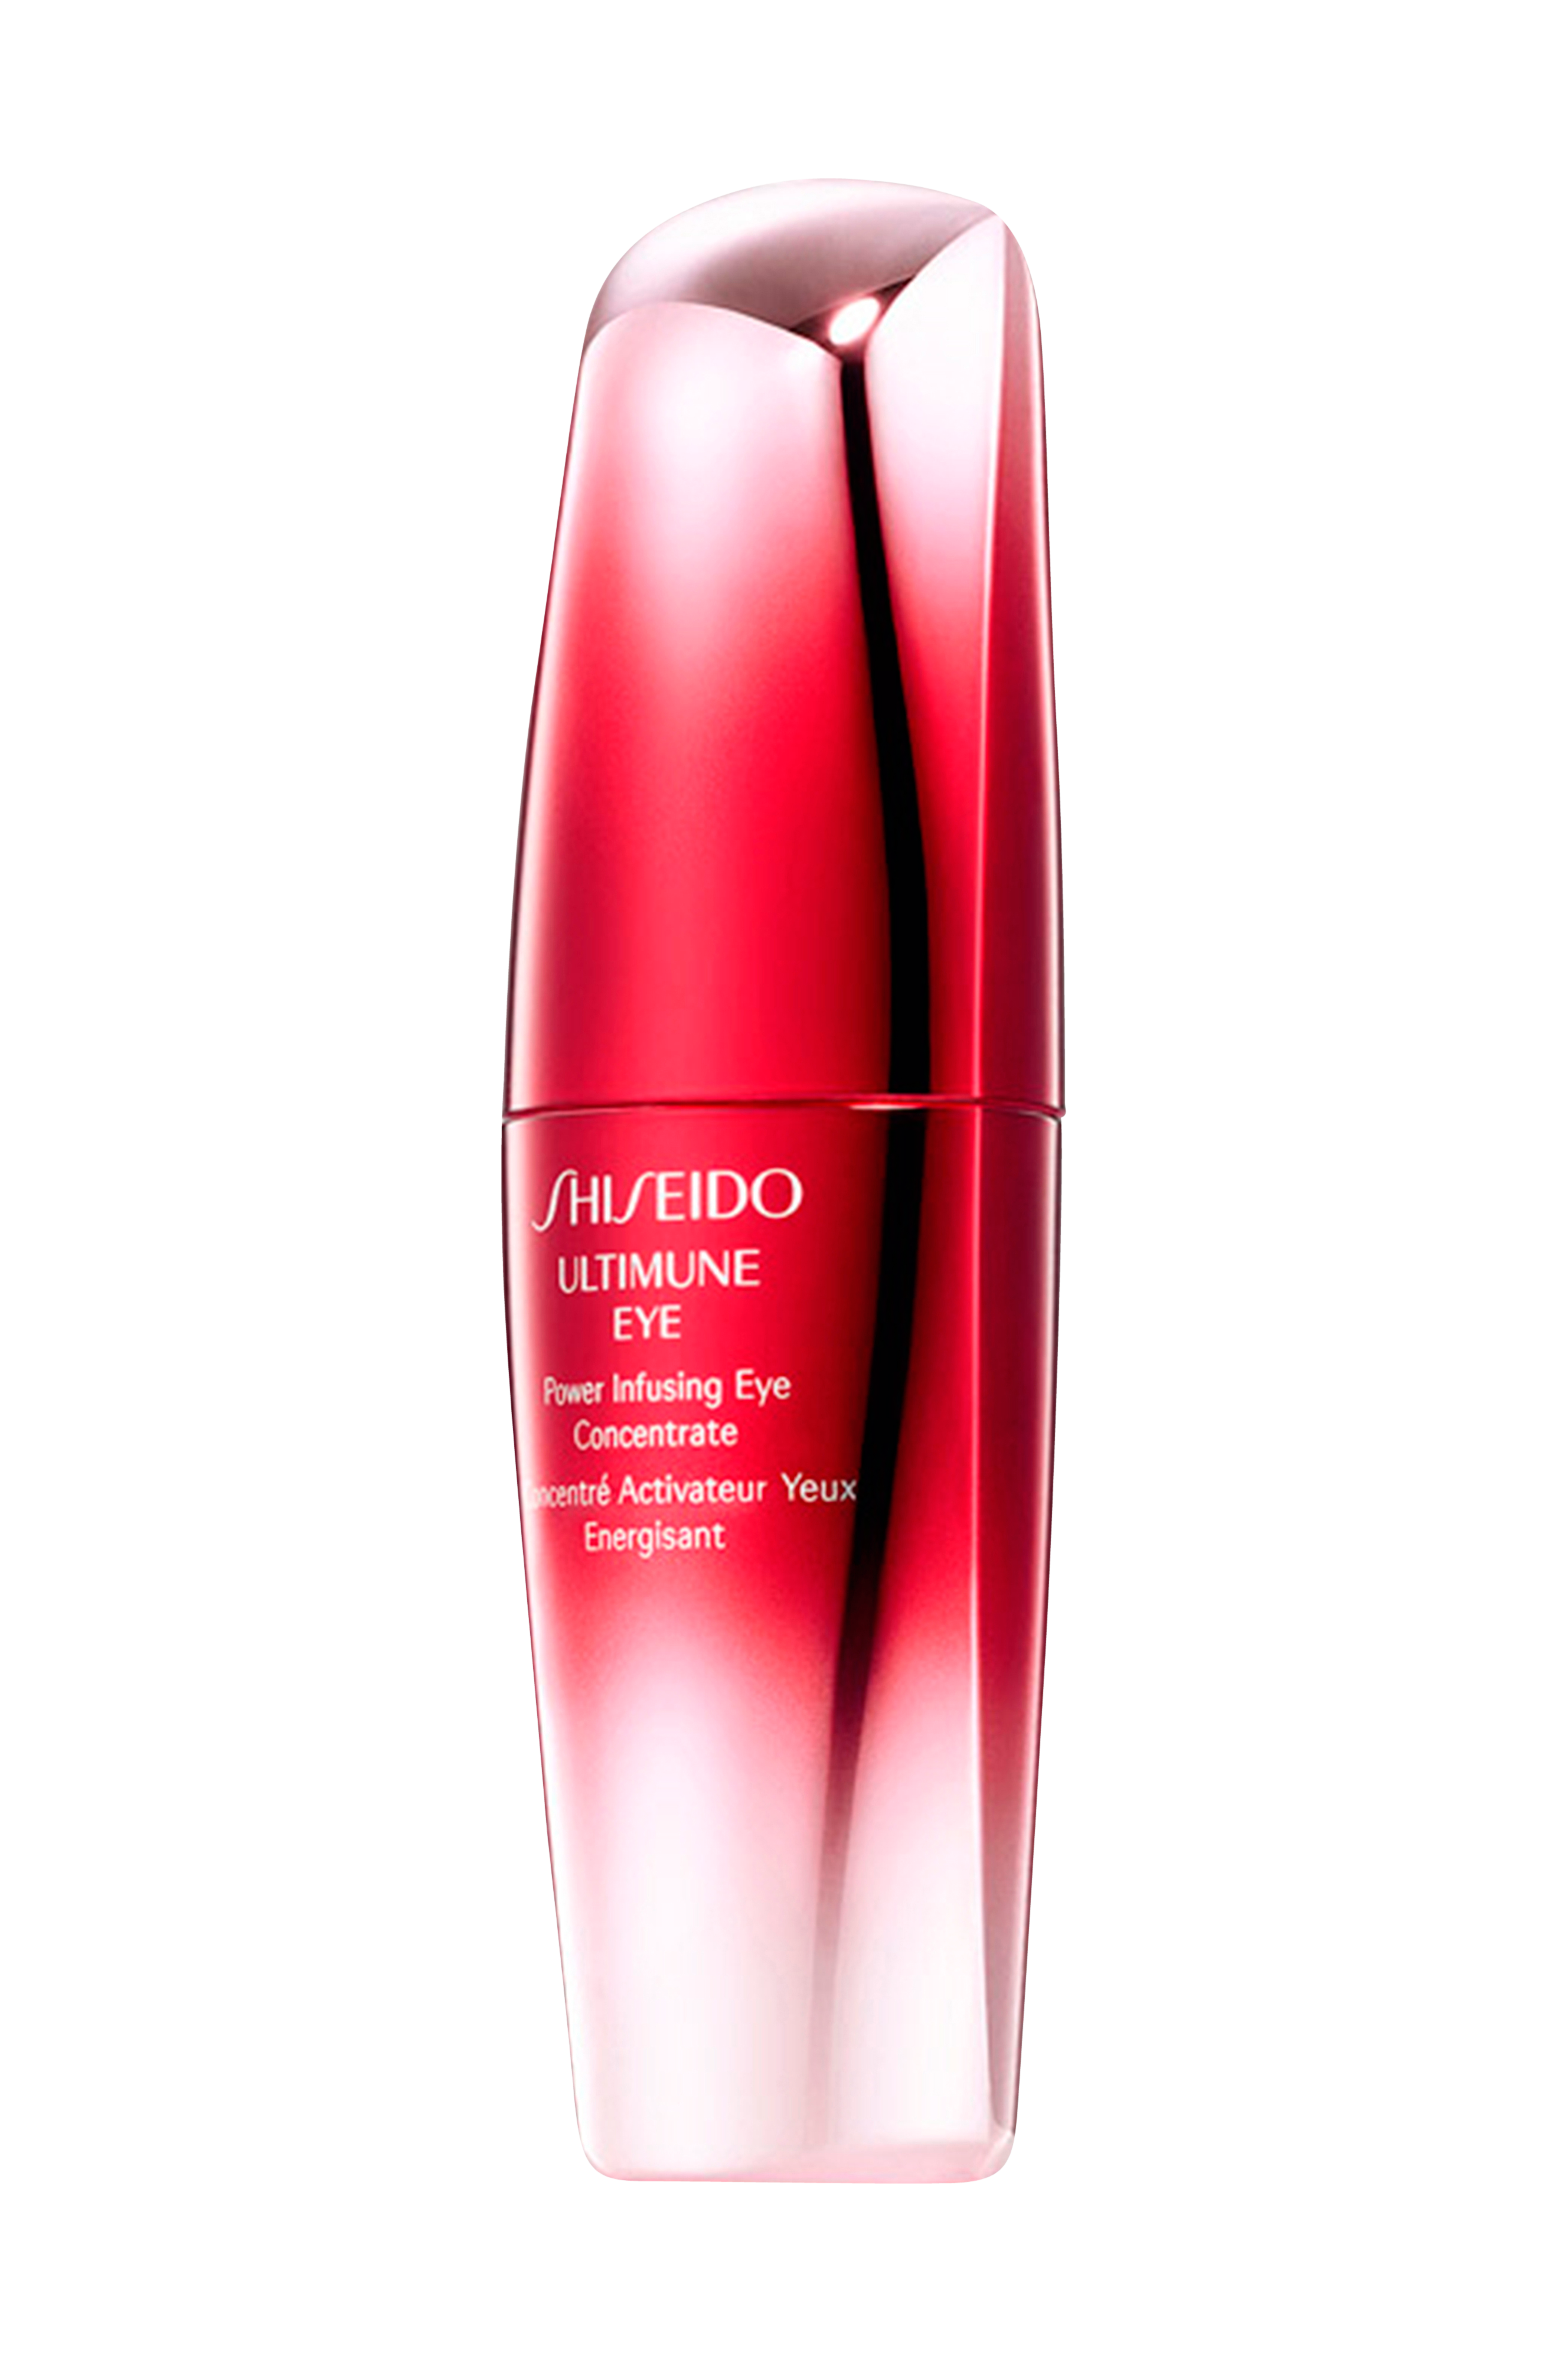 Shiseido сыворотка. Shiseido Ultimune Power infusing Concentrate. Shiseido Ultimune Eye Power infusing. Ultimune концентрат шисейдо. Shiseido Ultimune Eye Power infusing Eye Concentrate.